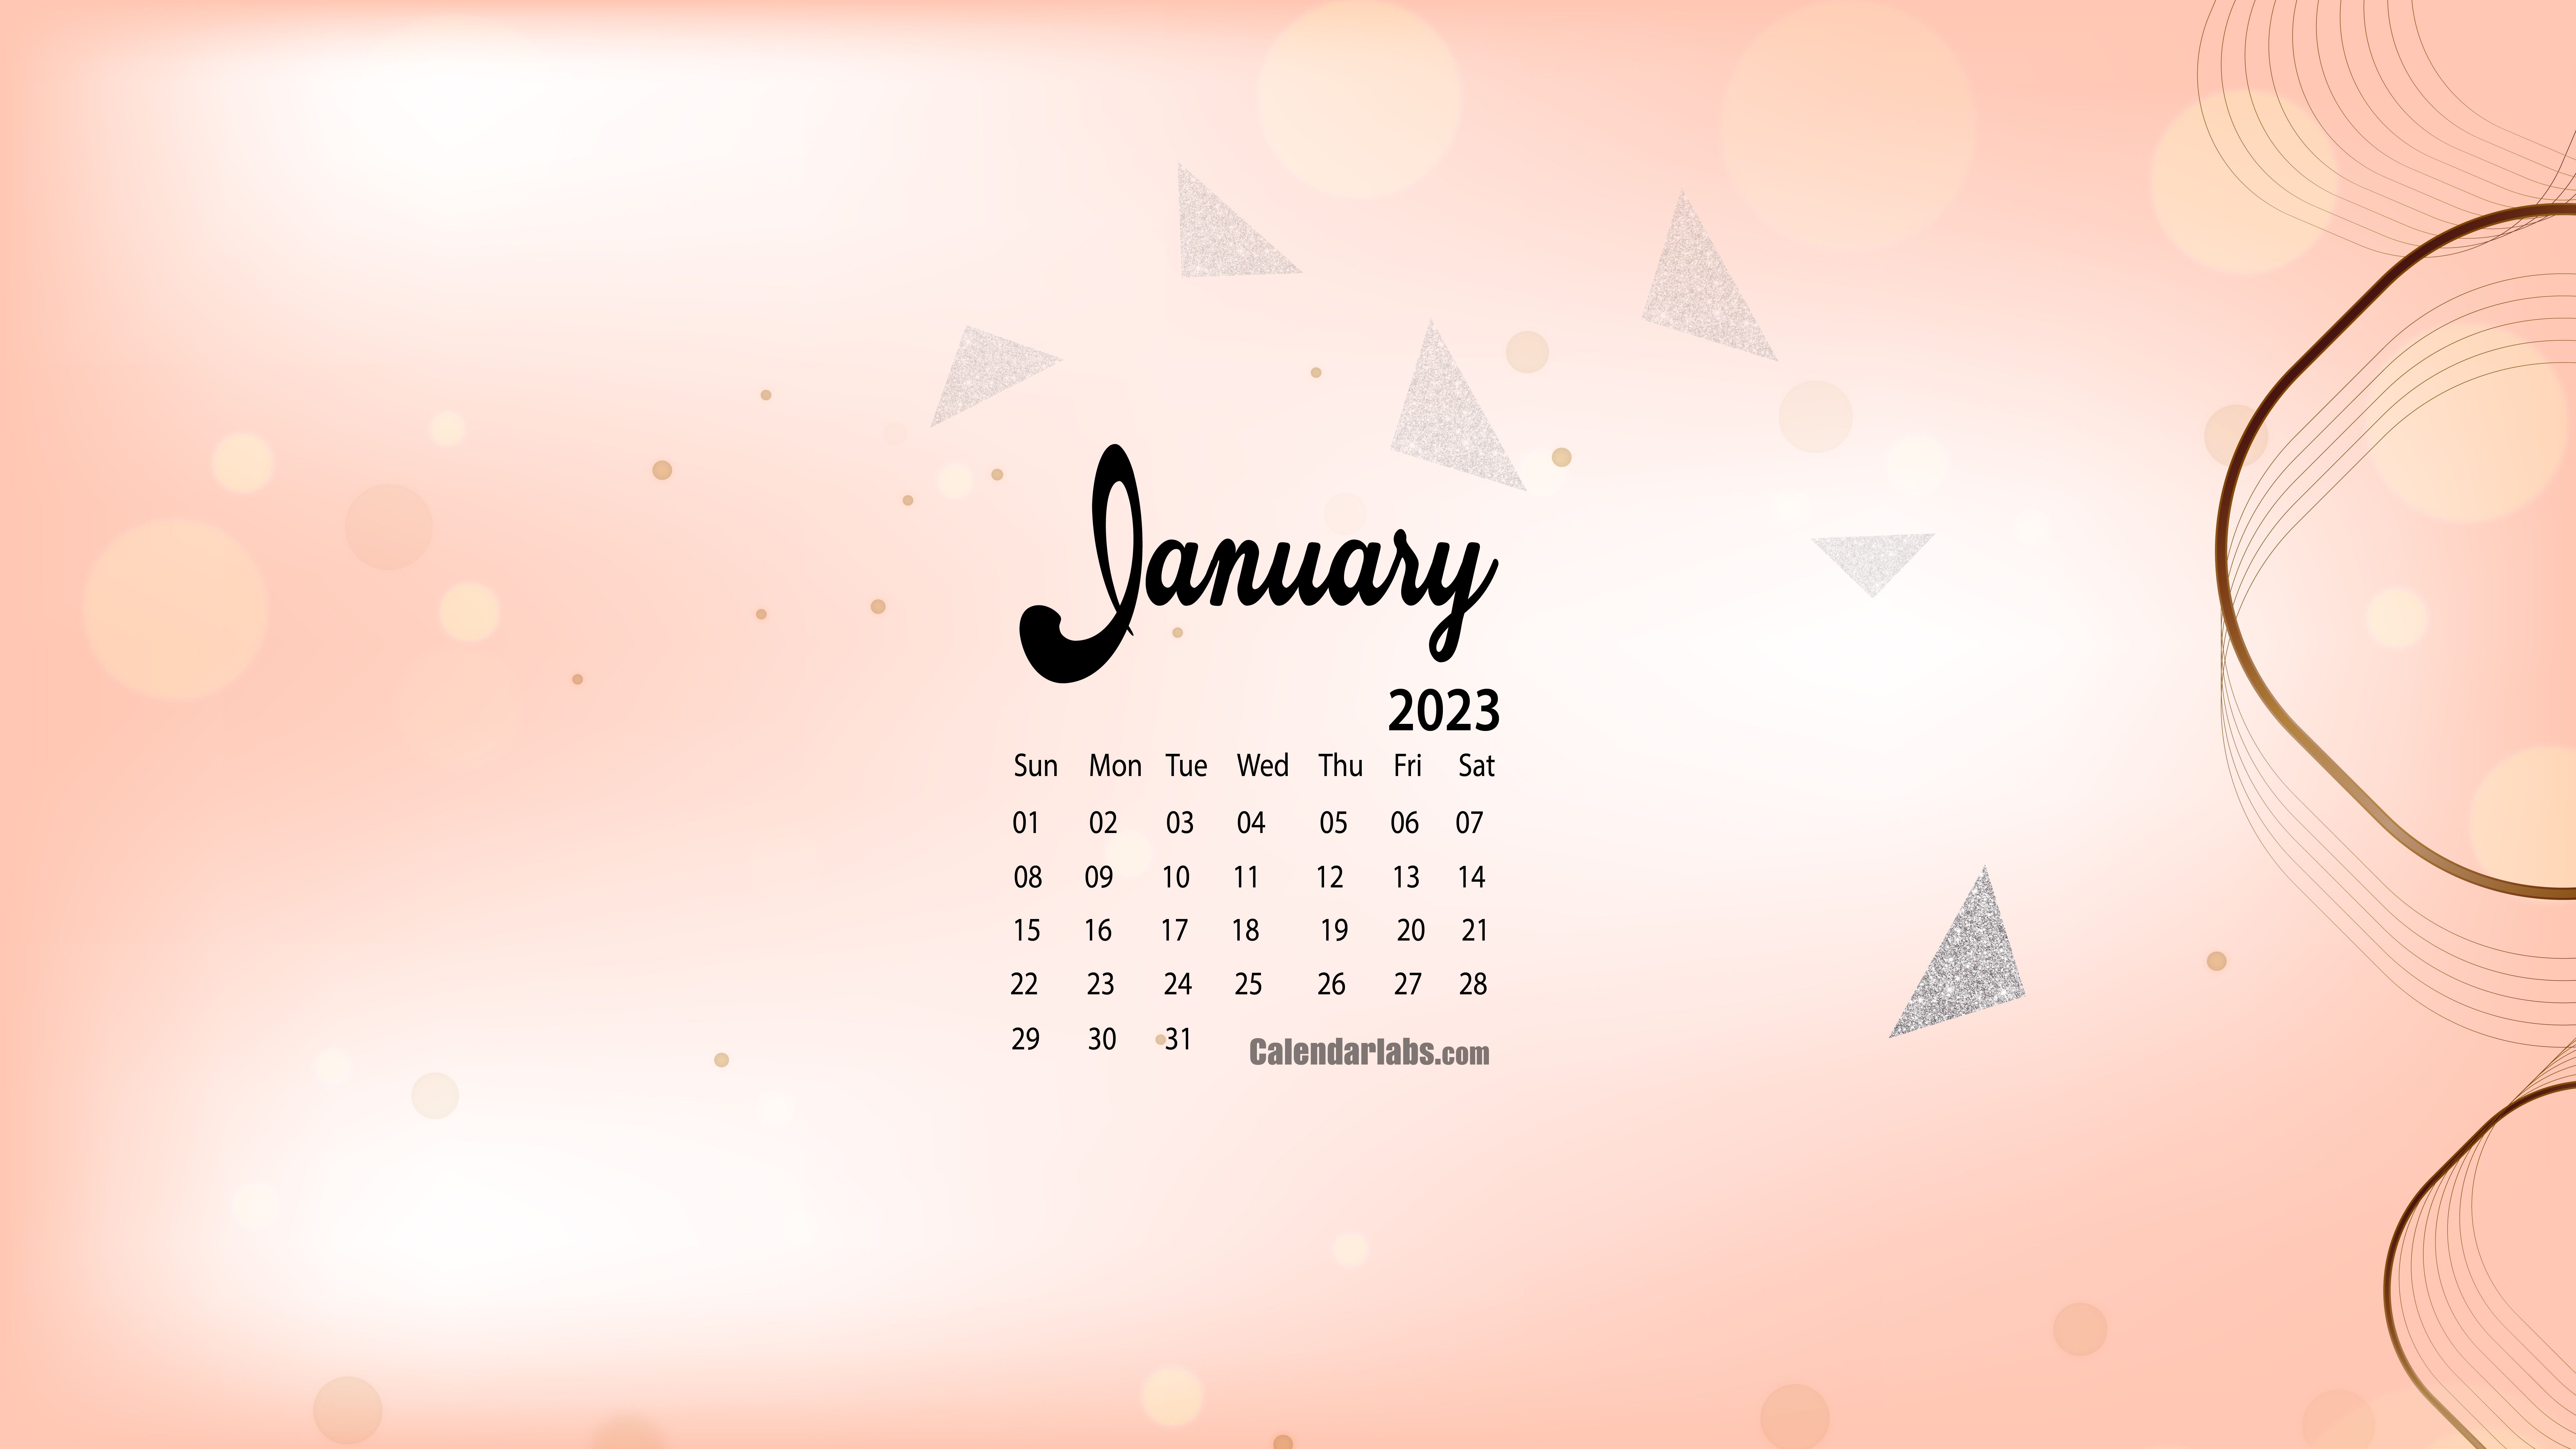  2023 Kalender Hintergrundbild 8000x4500. January 2023 Desktop Wallpaper Calendar